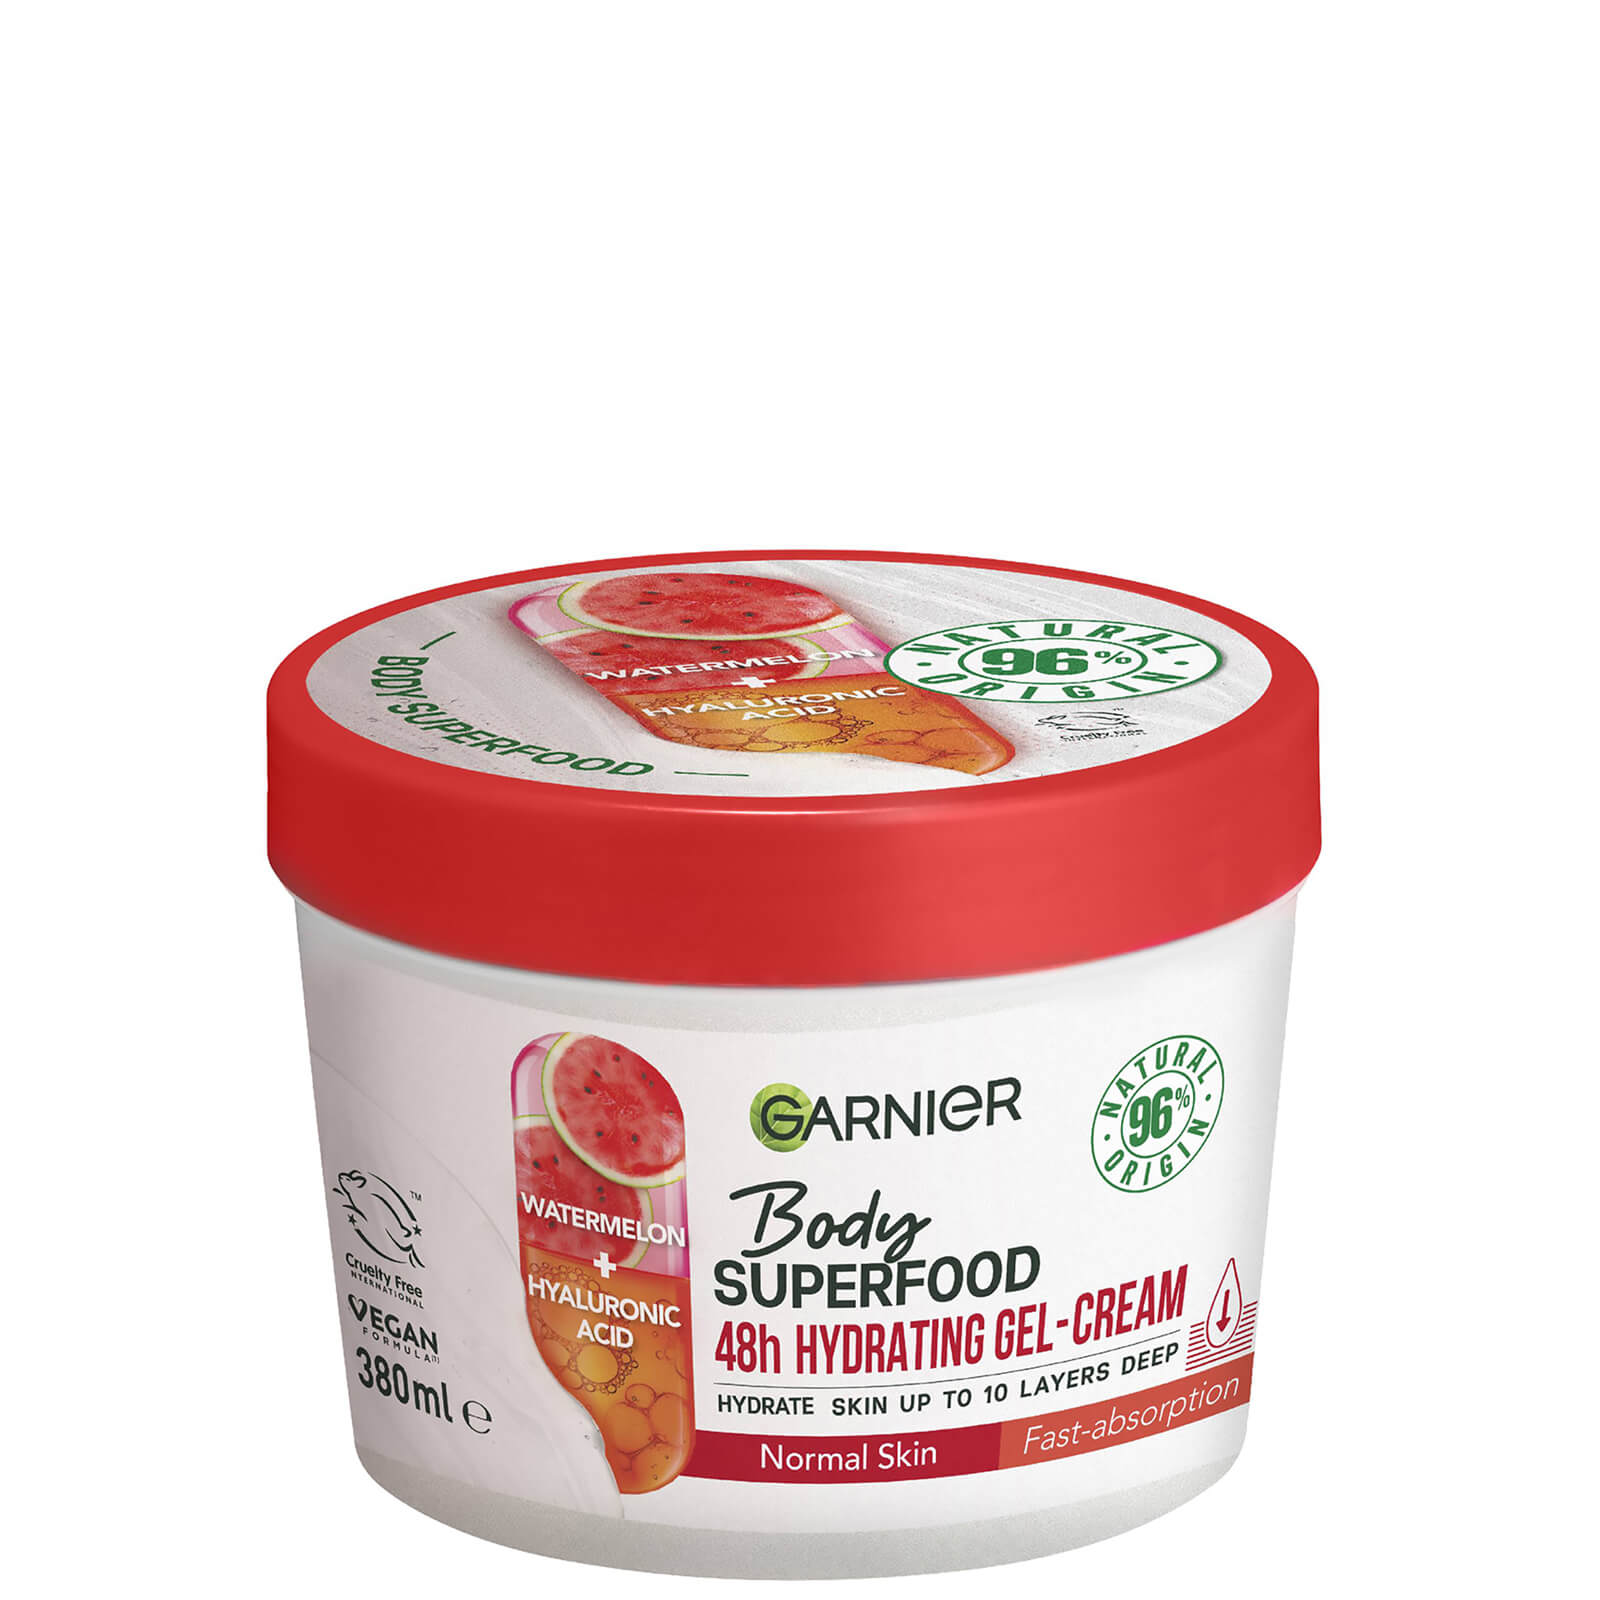 Image of Garnier Body Superfood, Hydrating Gel-Cream, Watermelon and Hyaluronic Acid 380ml